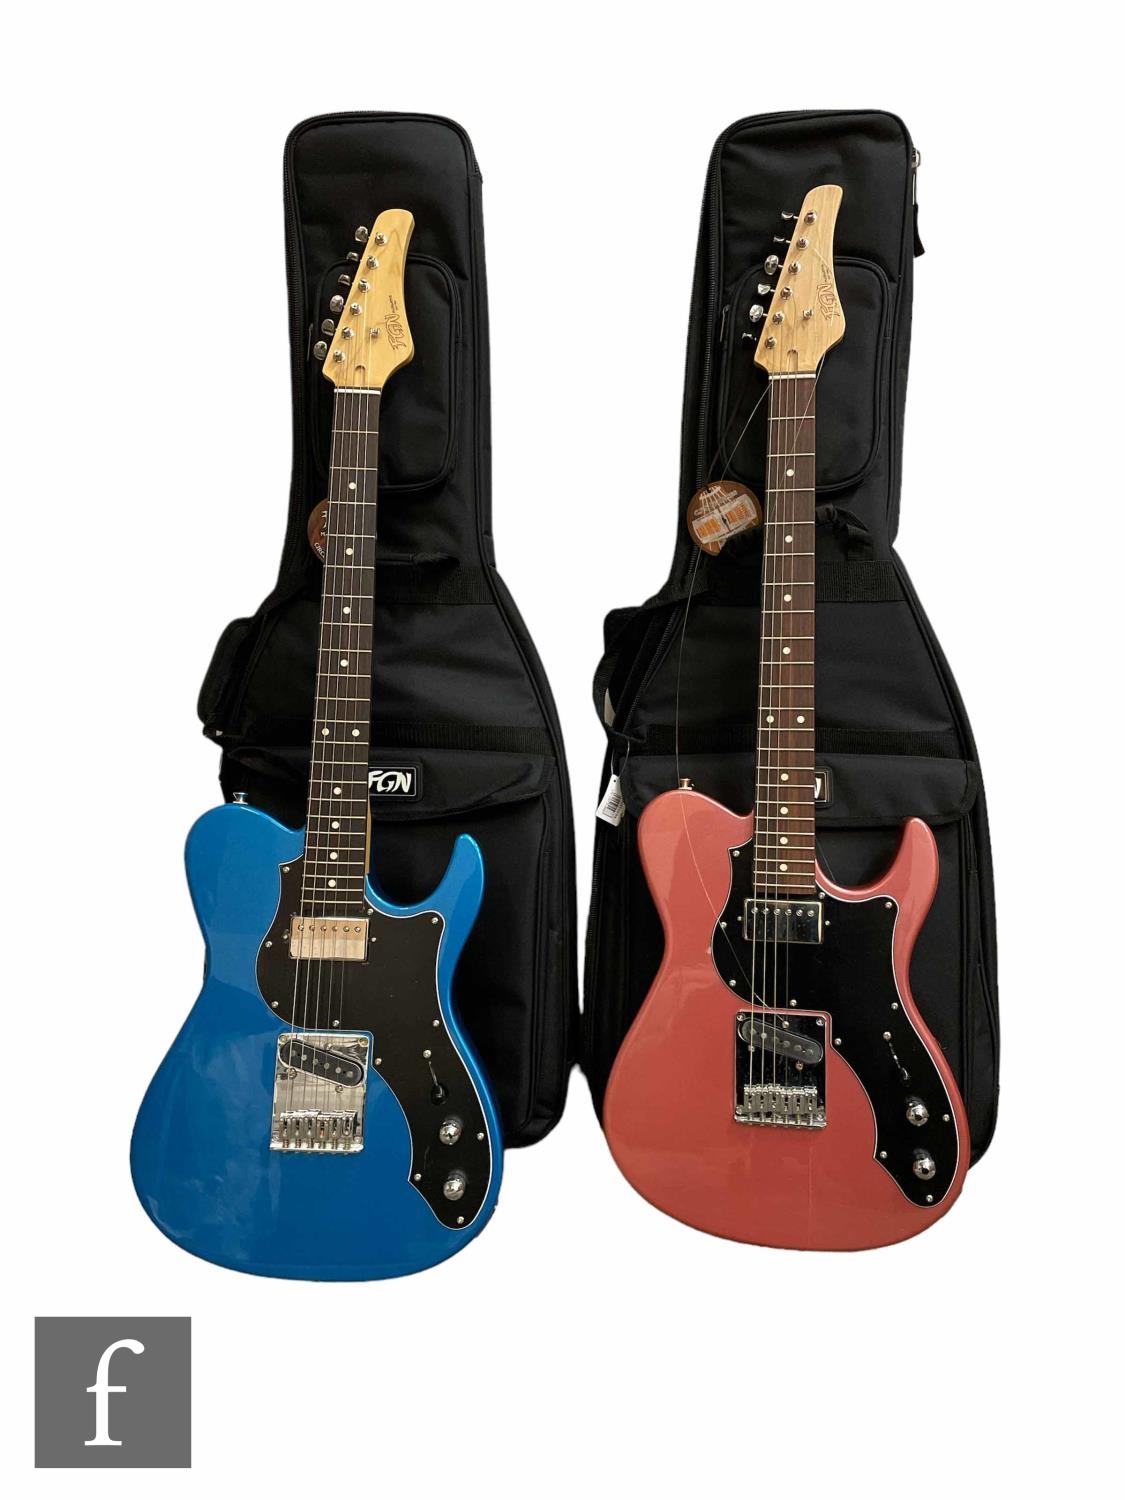 Two Fujigen FGN Boundary Iliad Bil2RHS Right Handed guitars 